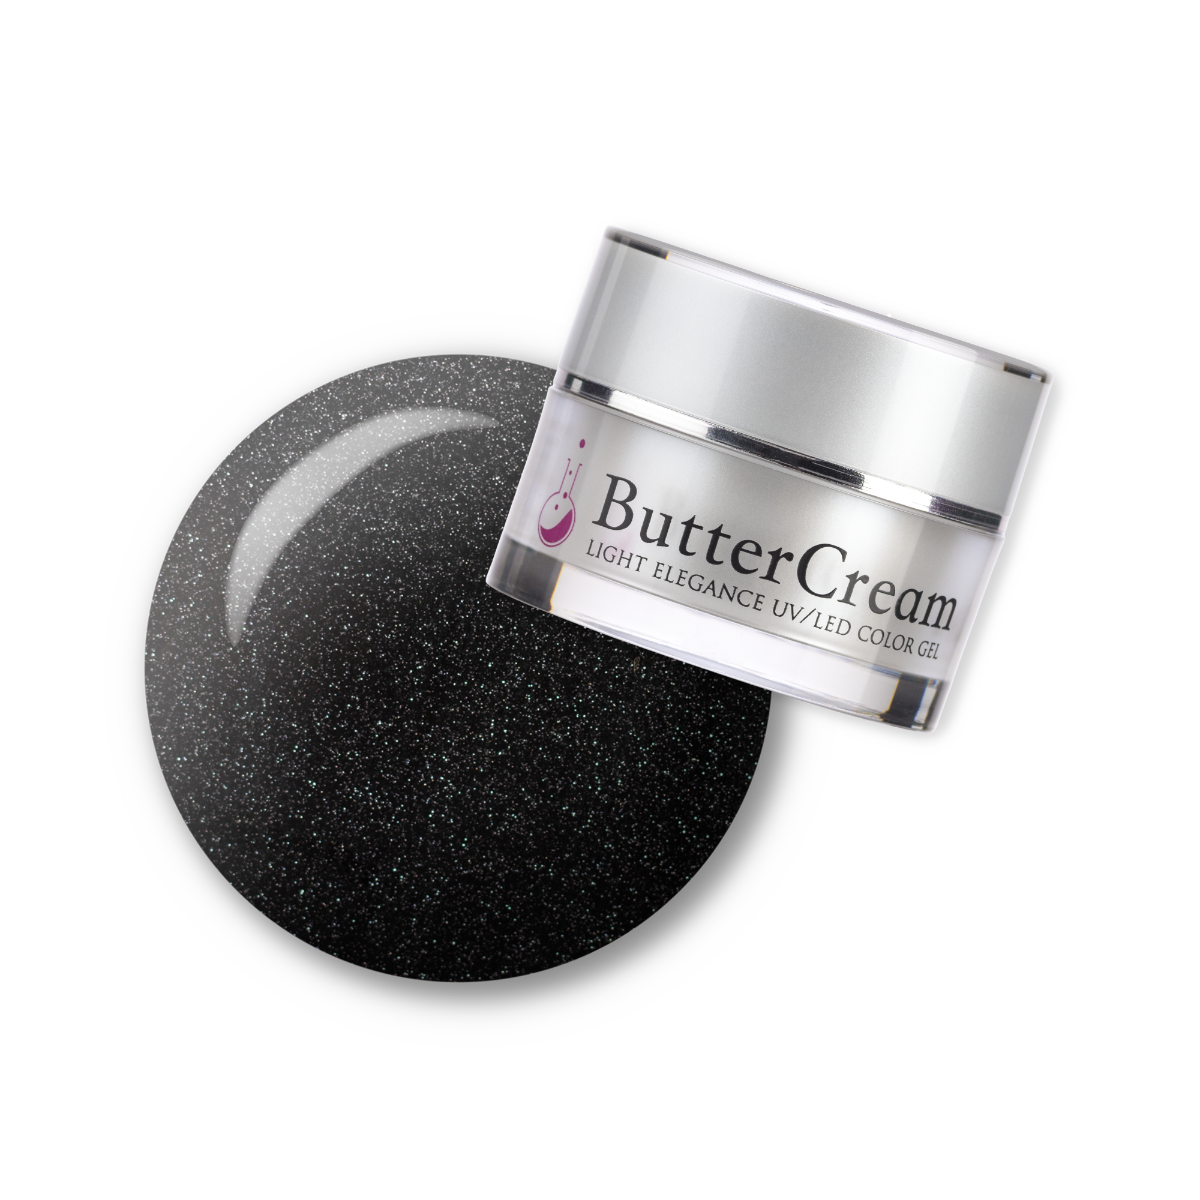 Light Elegance ButterCreams LED/UV - Lovers Lane - Creata Beauty - Professional Beauty Products